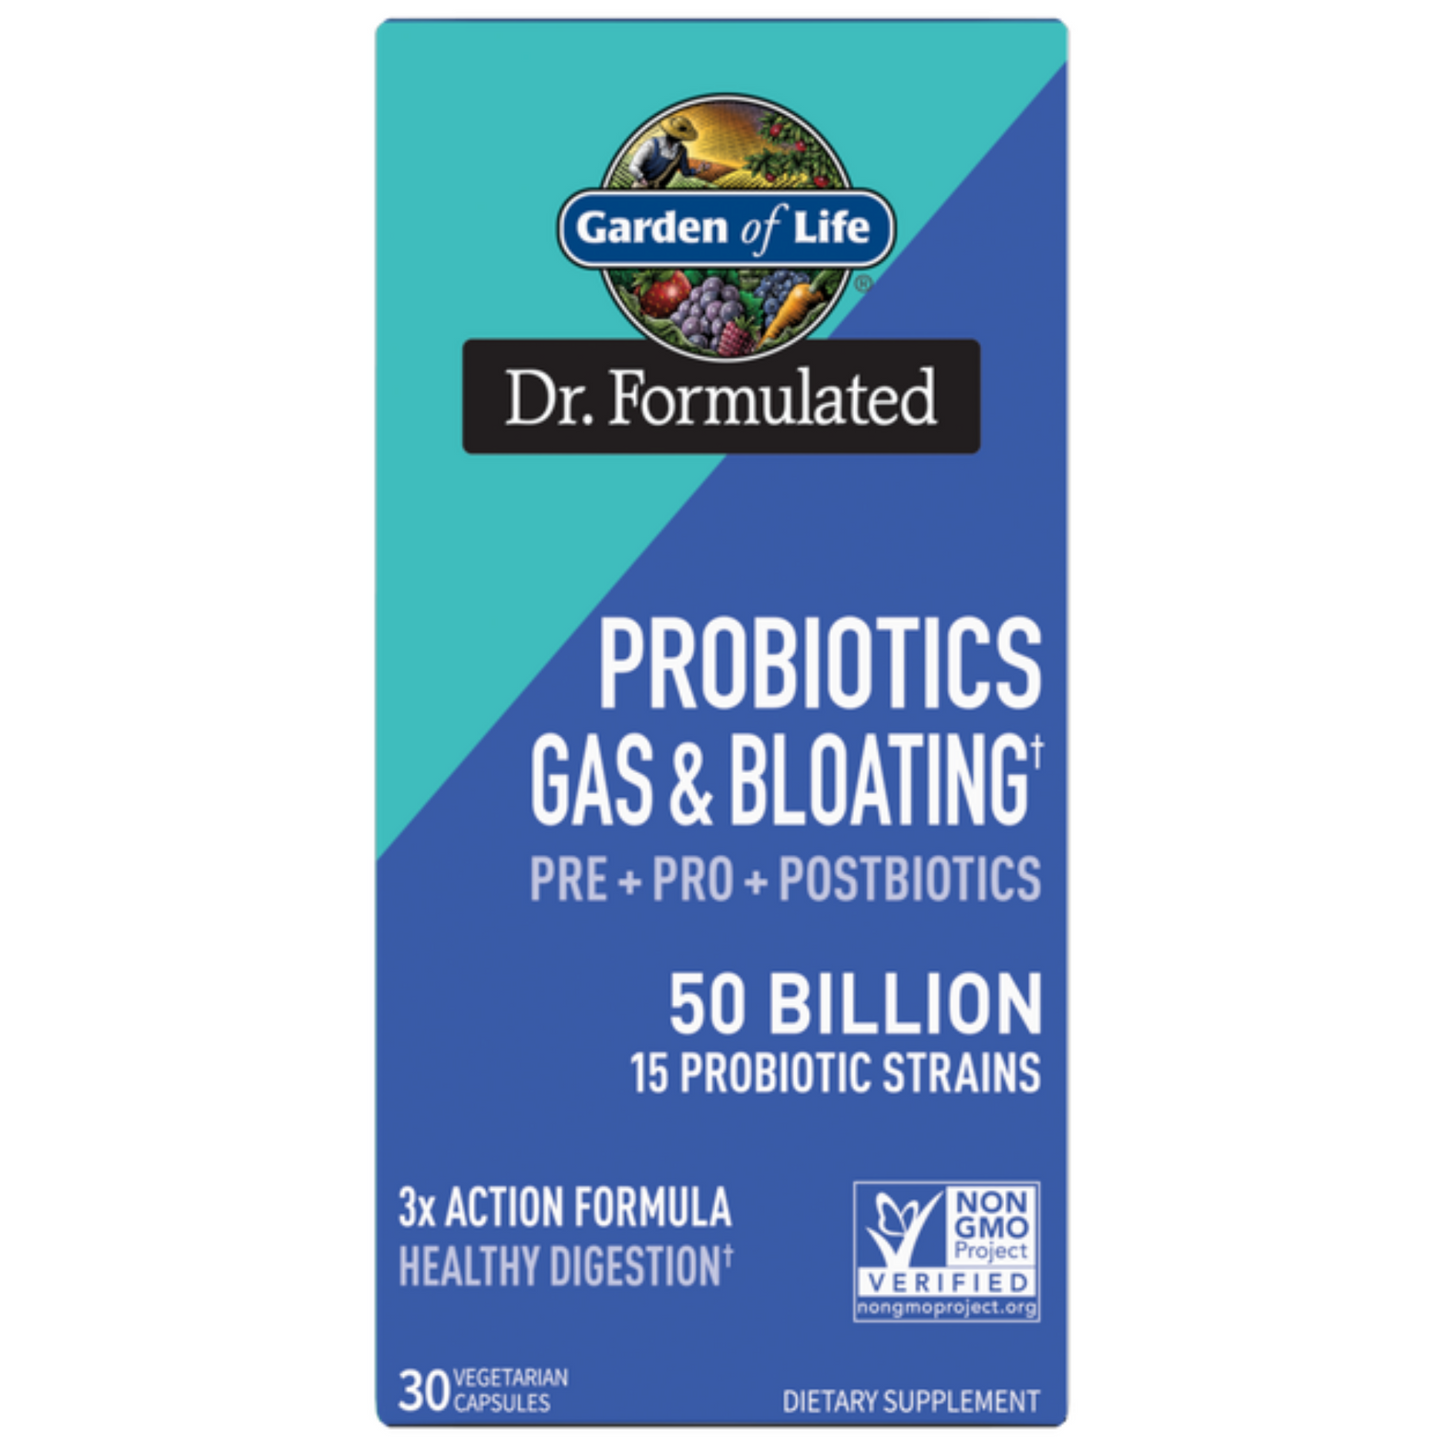 Primary Image of Probiotics Gas & Bloating 50B Capsules